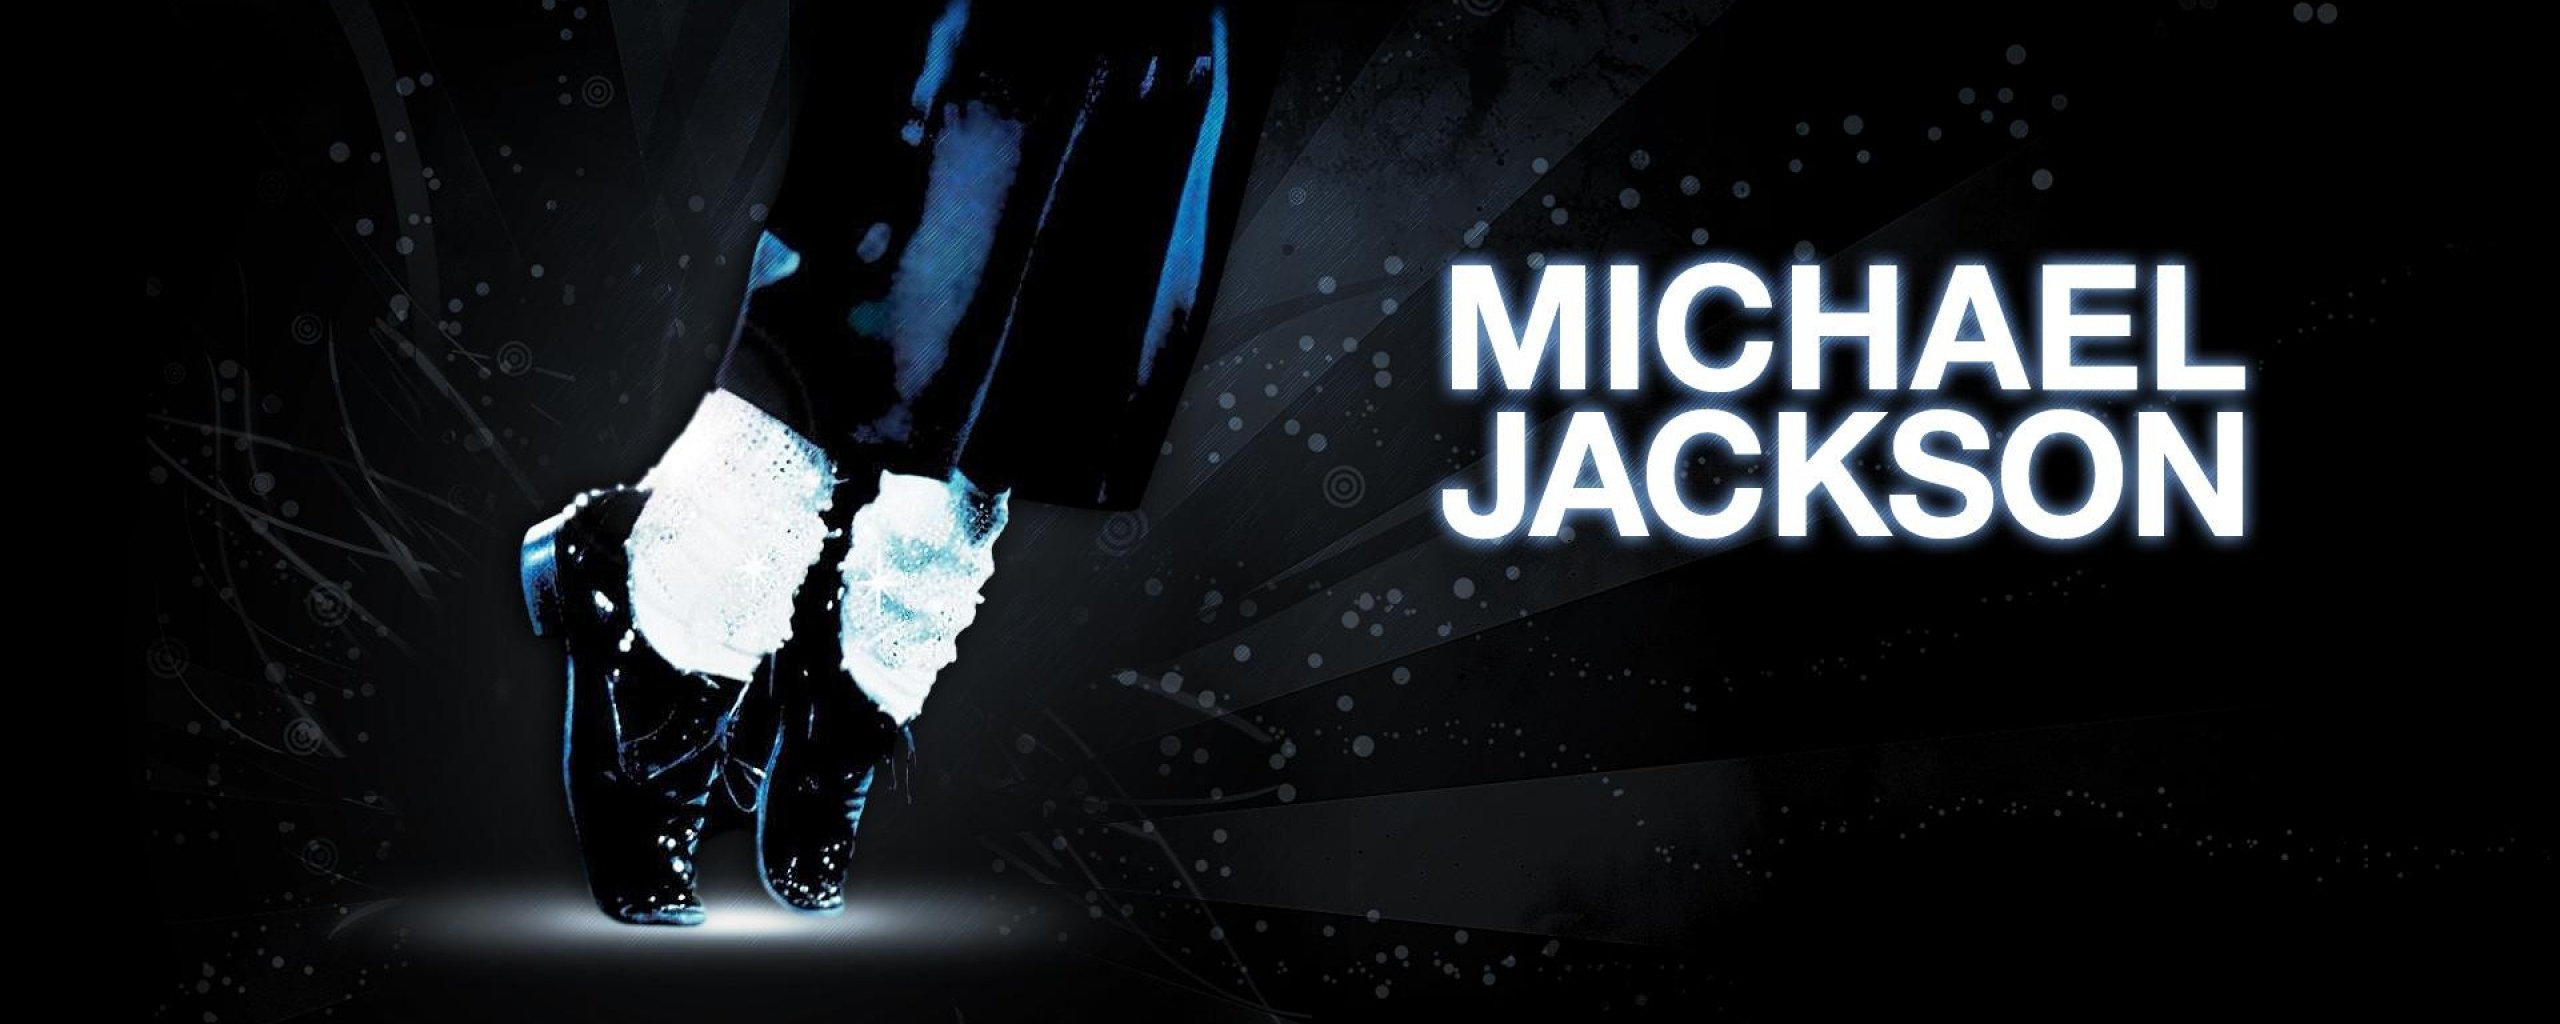 Michael Jackson Wallpapers HD A3